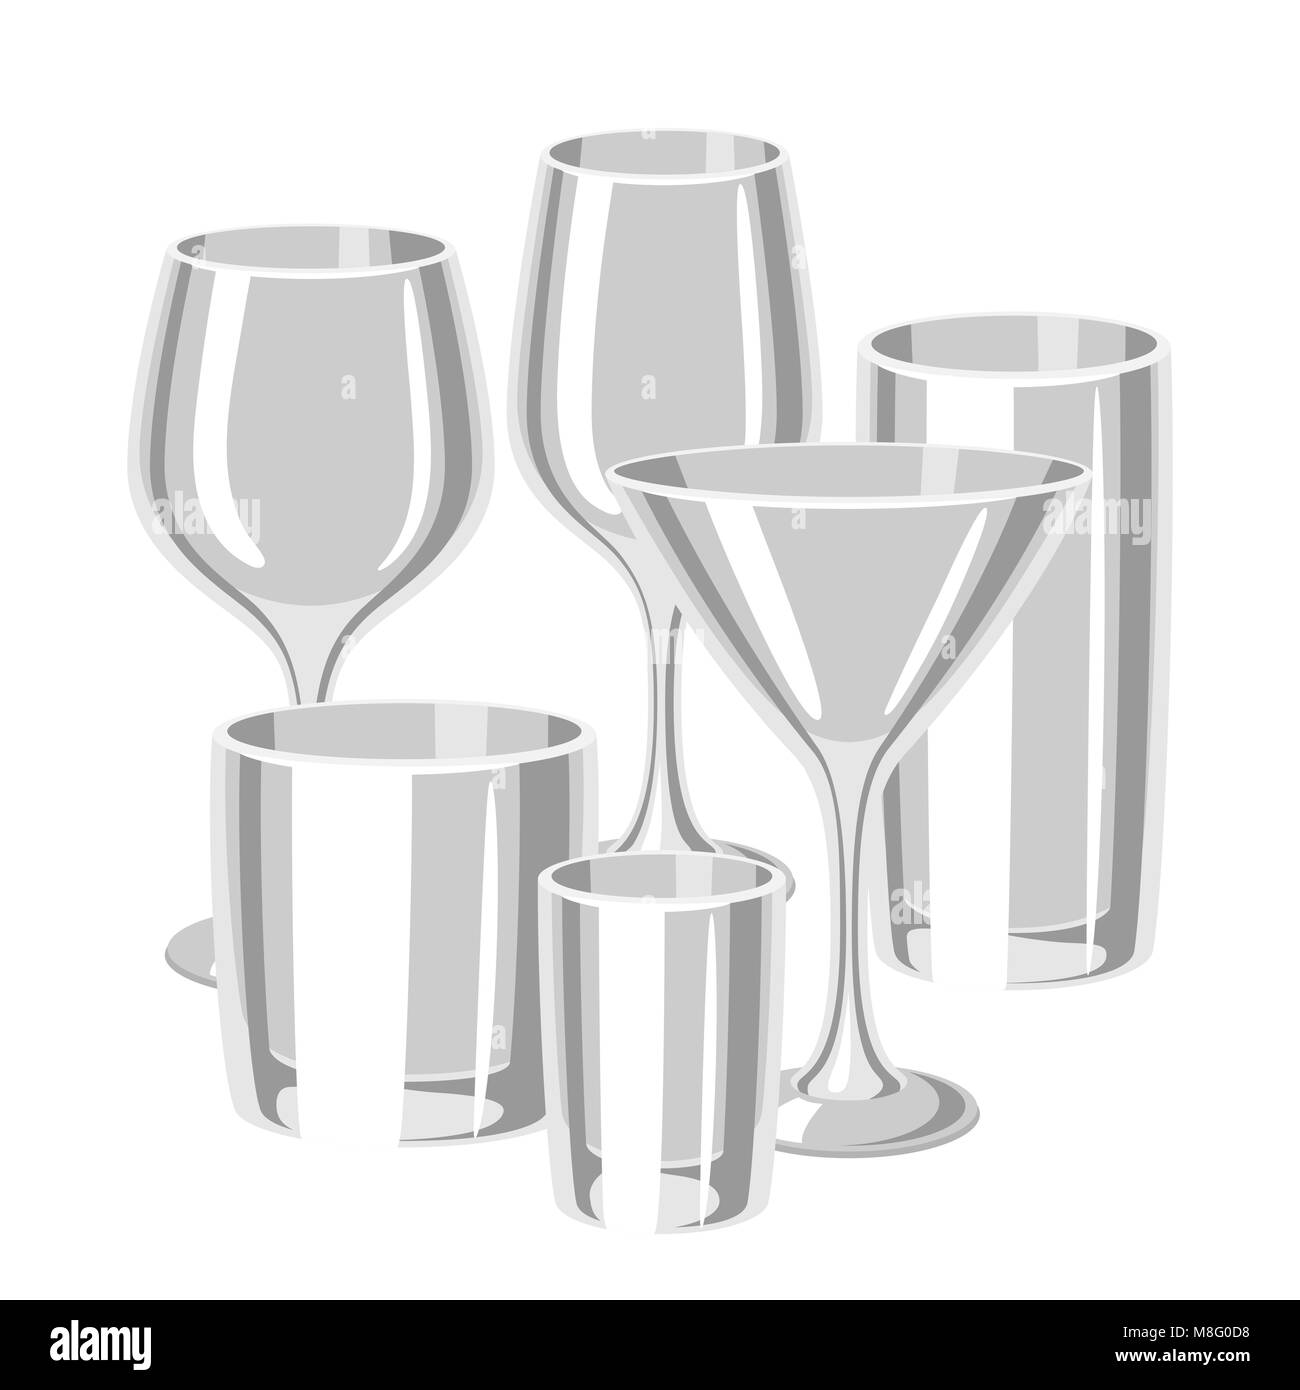 Shot glasses bar Black and White Stock Photos & Images - Alamy